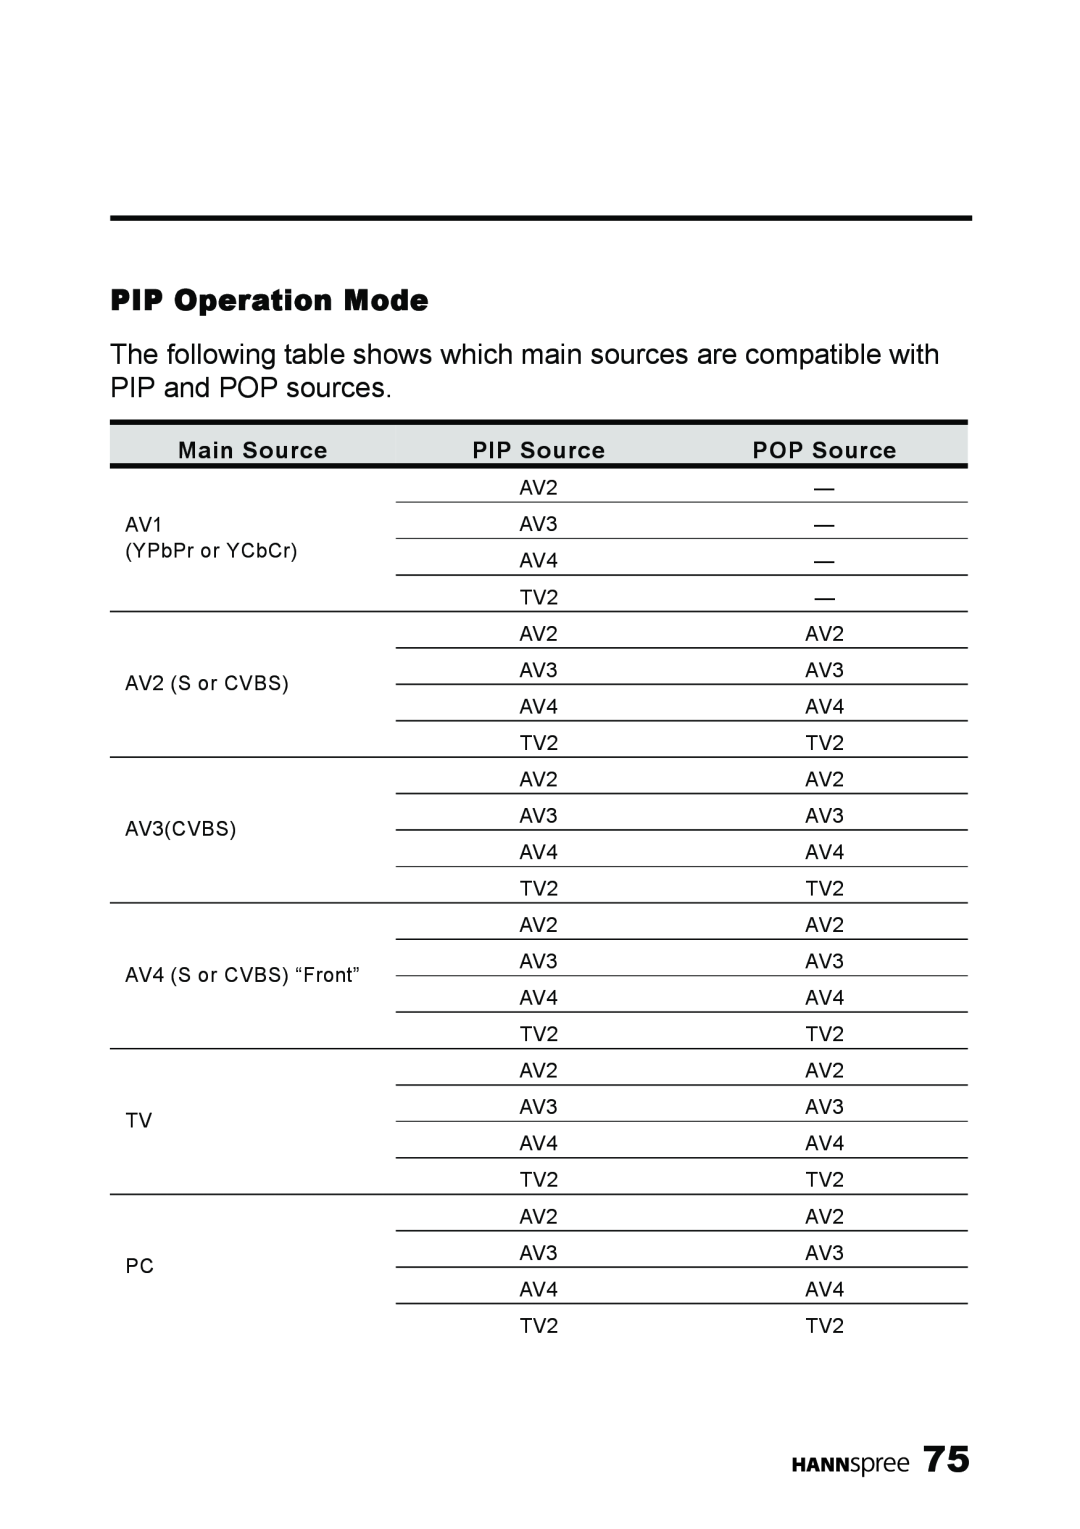 HANNspree LT11-23A1 user manual PIP Operation Mode, Main Source, PIP Source, POP Source 